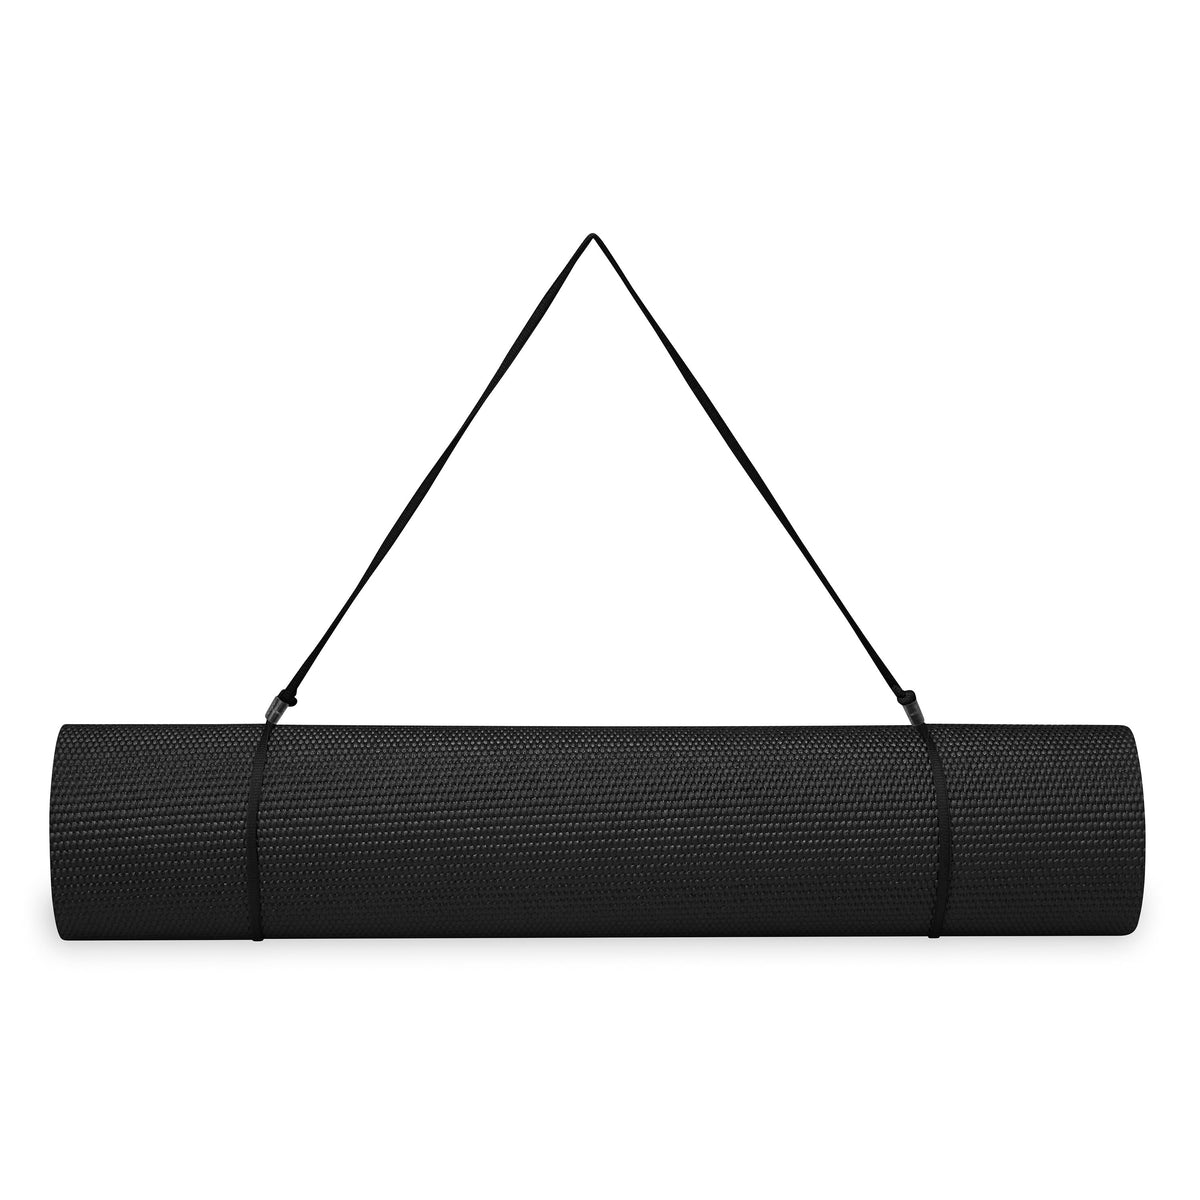 Theyogawarehouse Product Detail: Gaiam Spiral Motion Reversible Yoga Mat ( 6mm), Gaiam Mats, gai-ymsm-2300